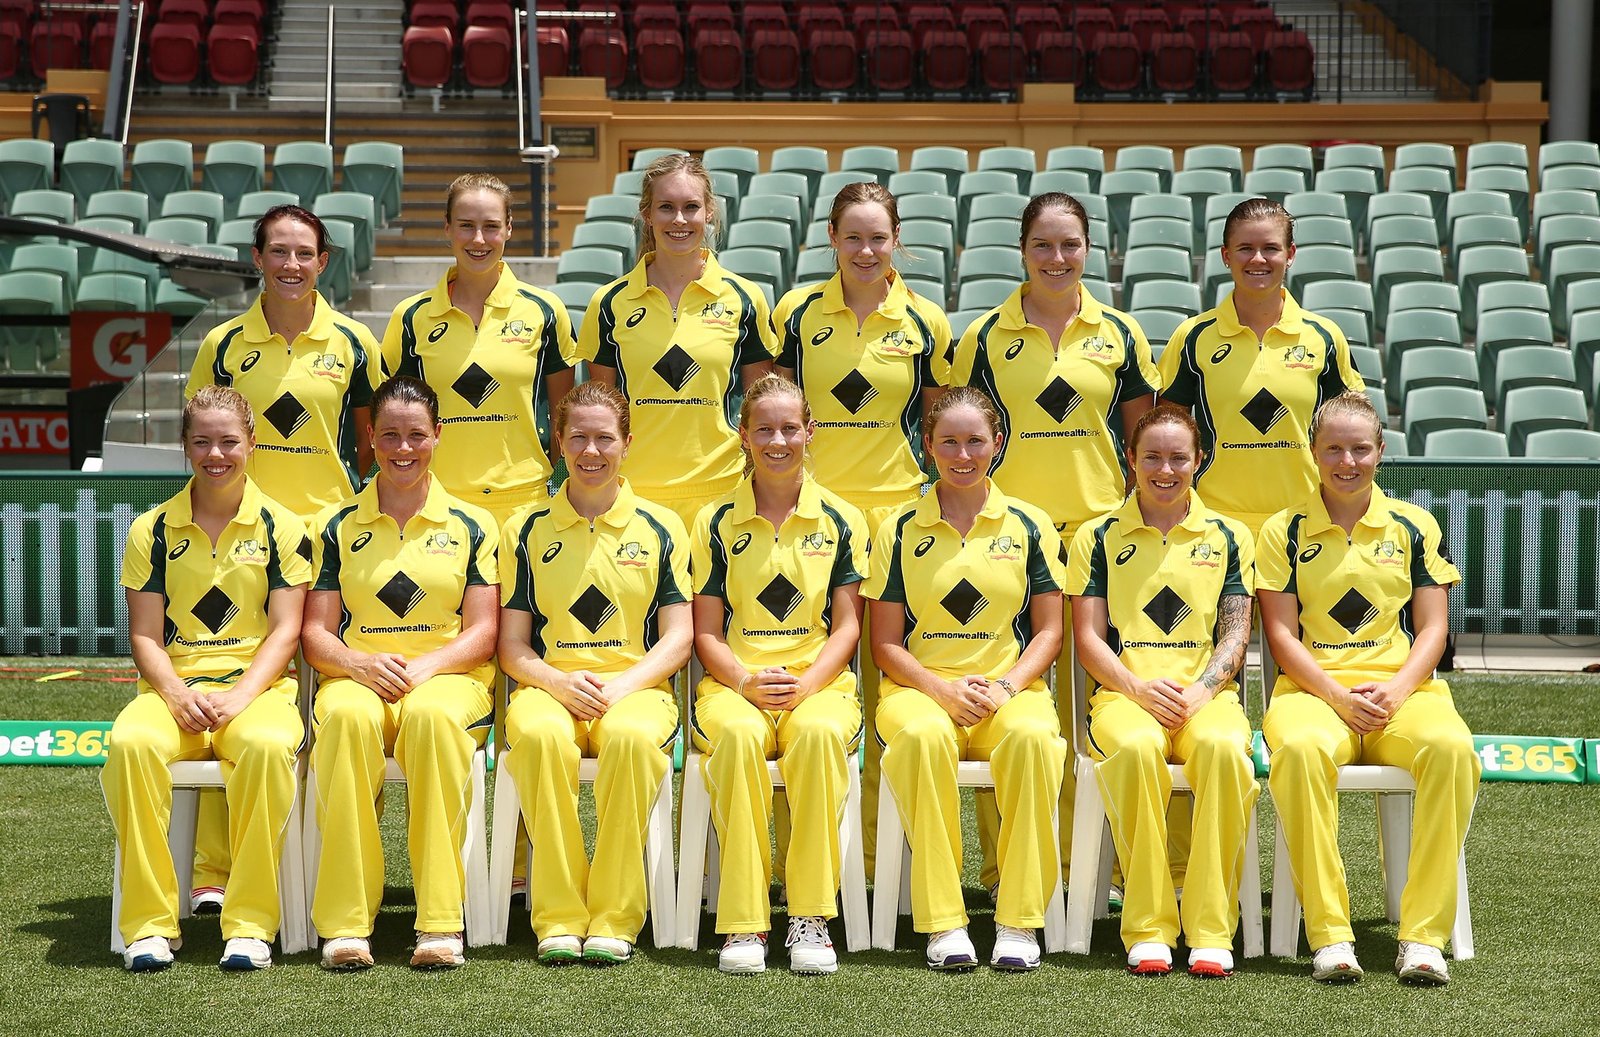 Australia Women's Cricket Team player